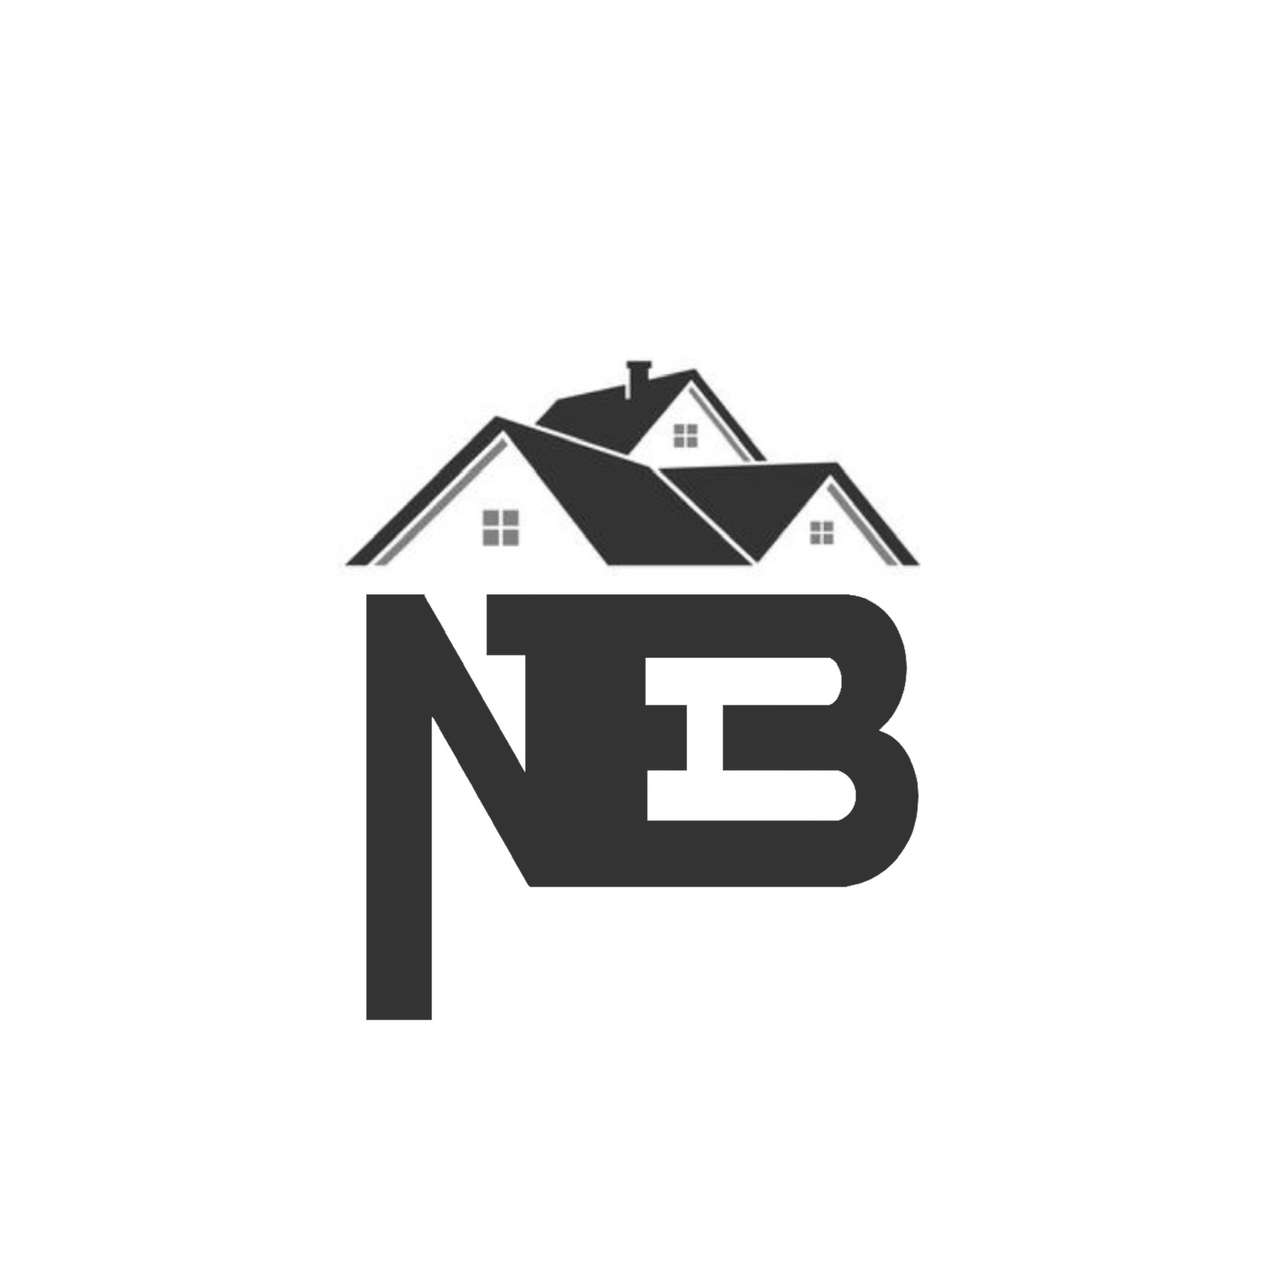 New Era Builder, Inc. Logo